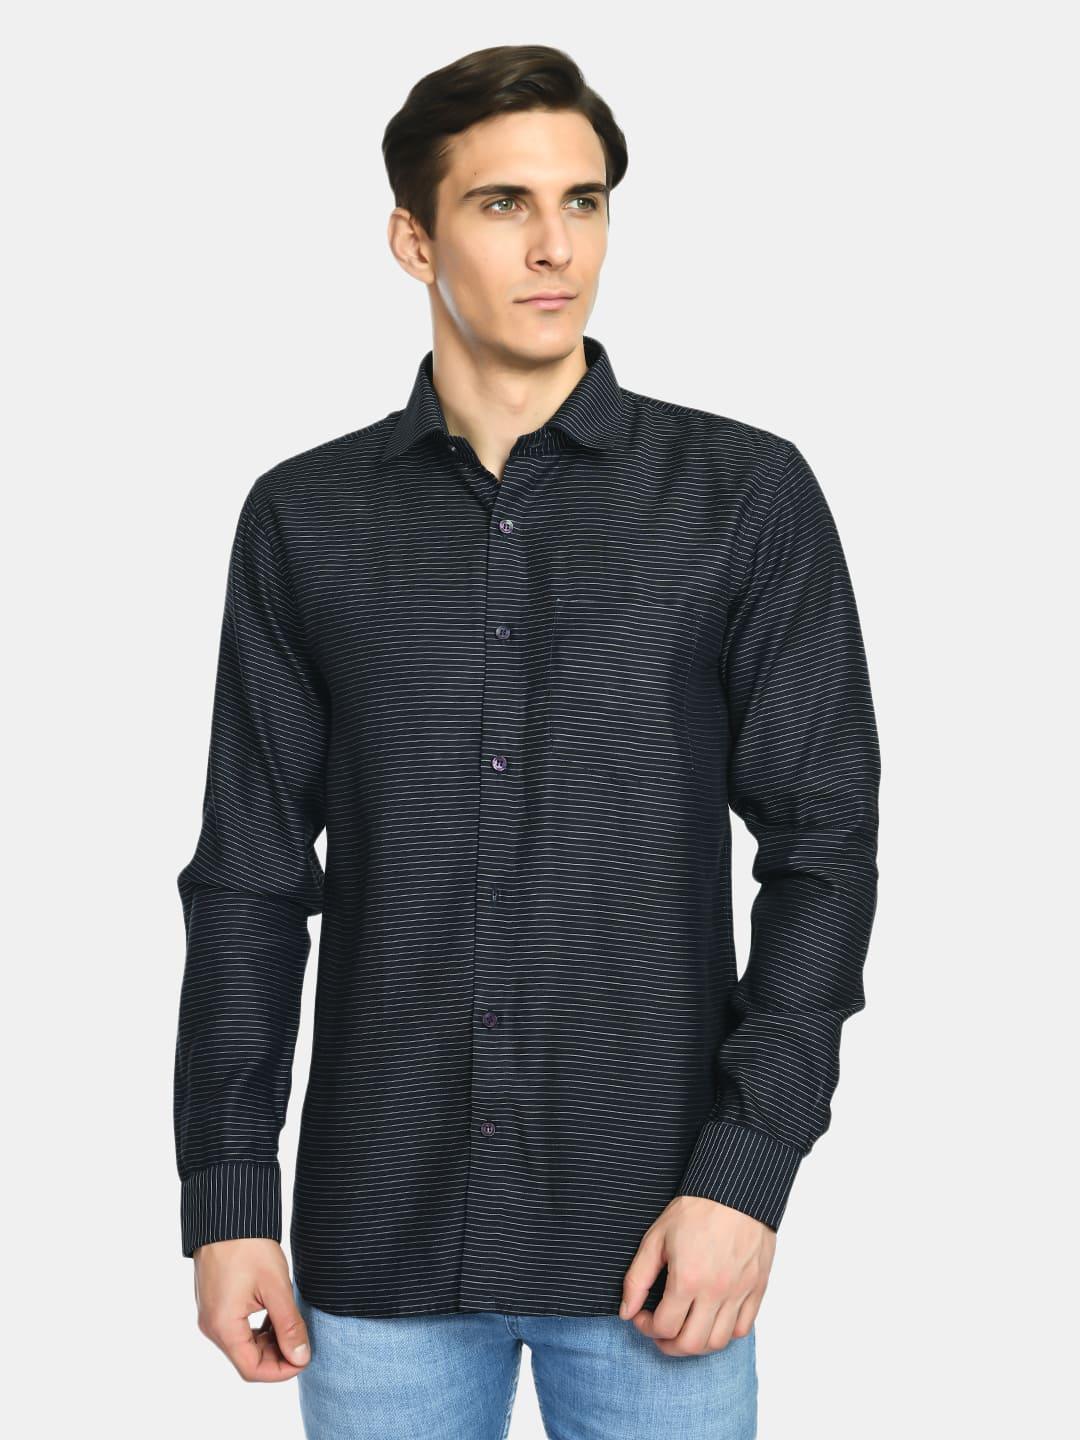 Men's Navy Stripes Cotton Regular Fit Shirt